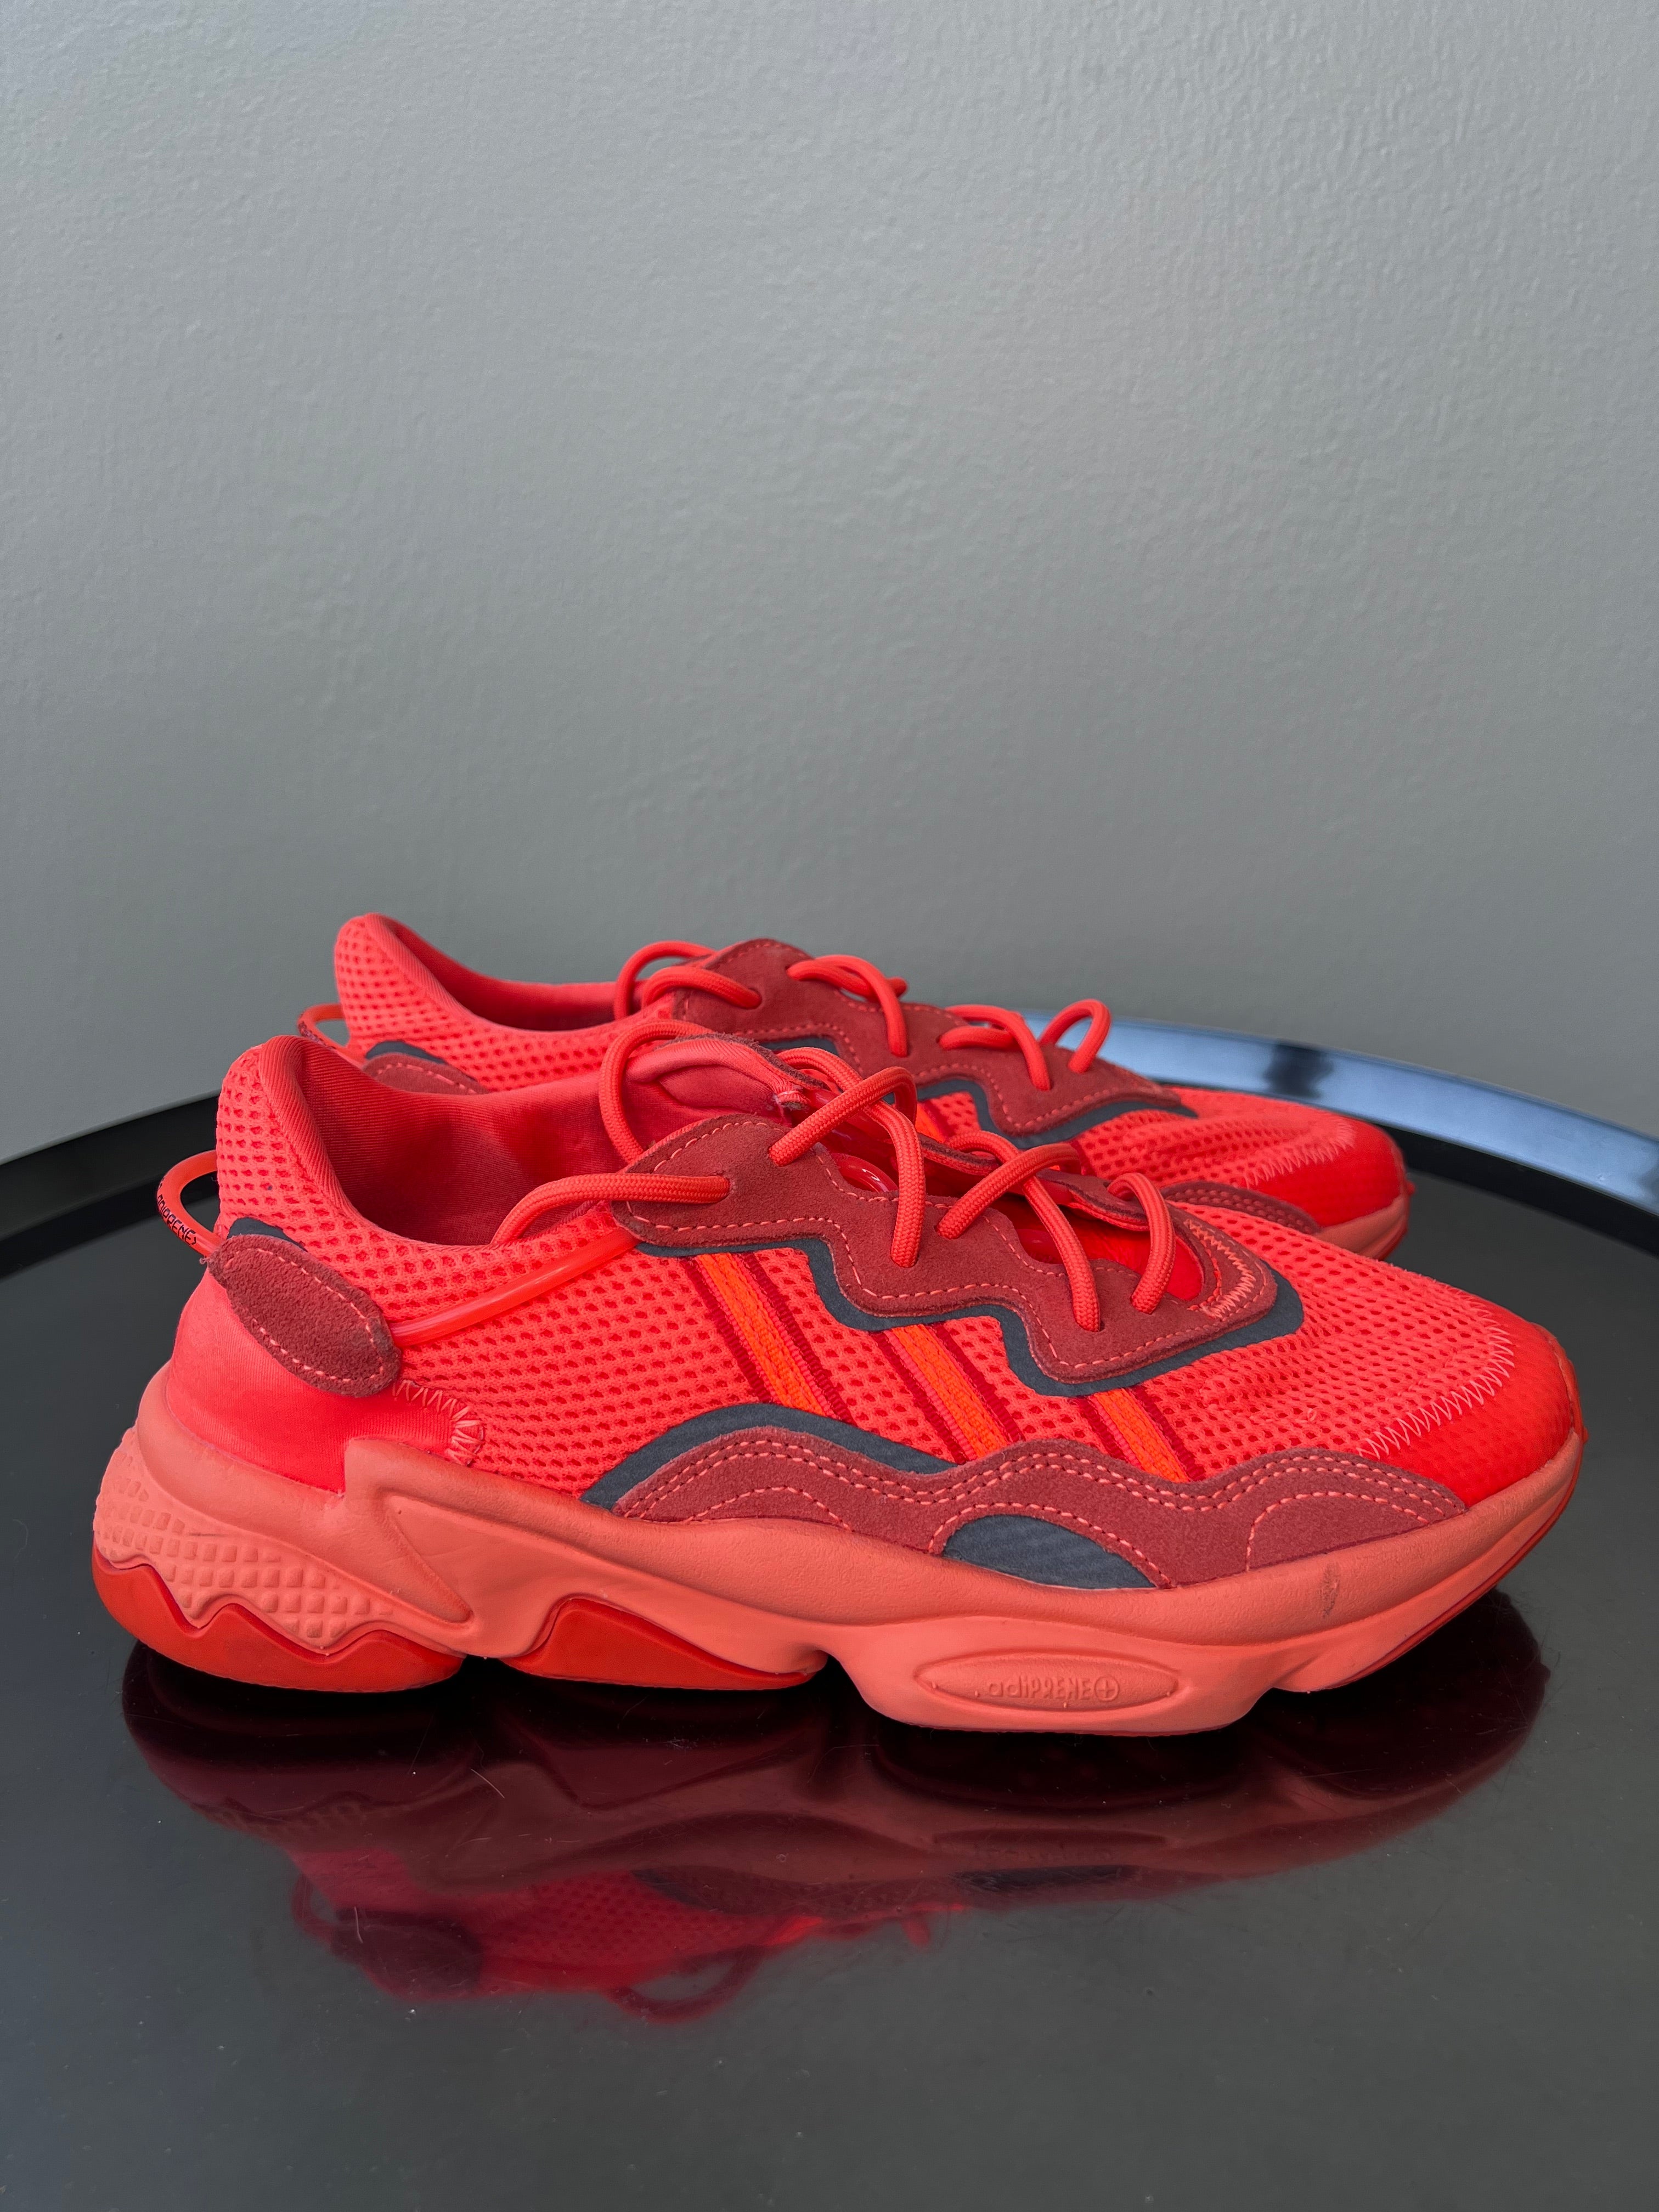 Bright orange sneakers. - ADIDAS